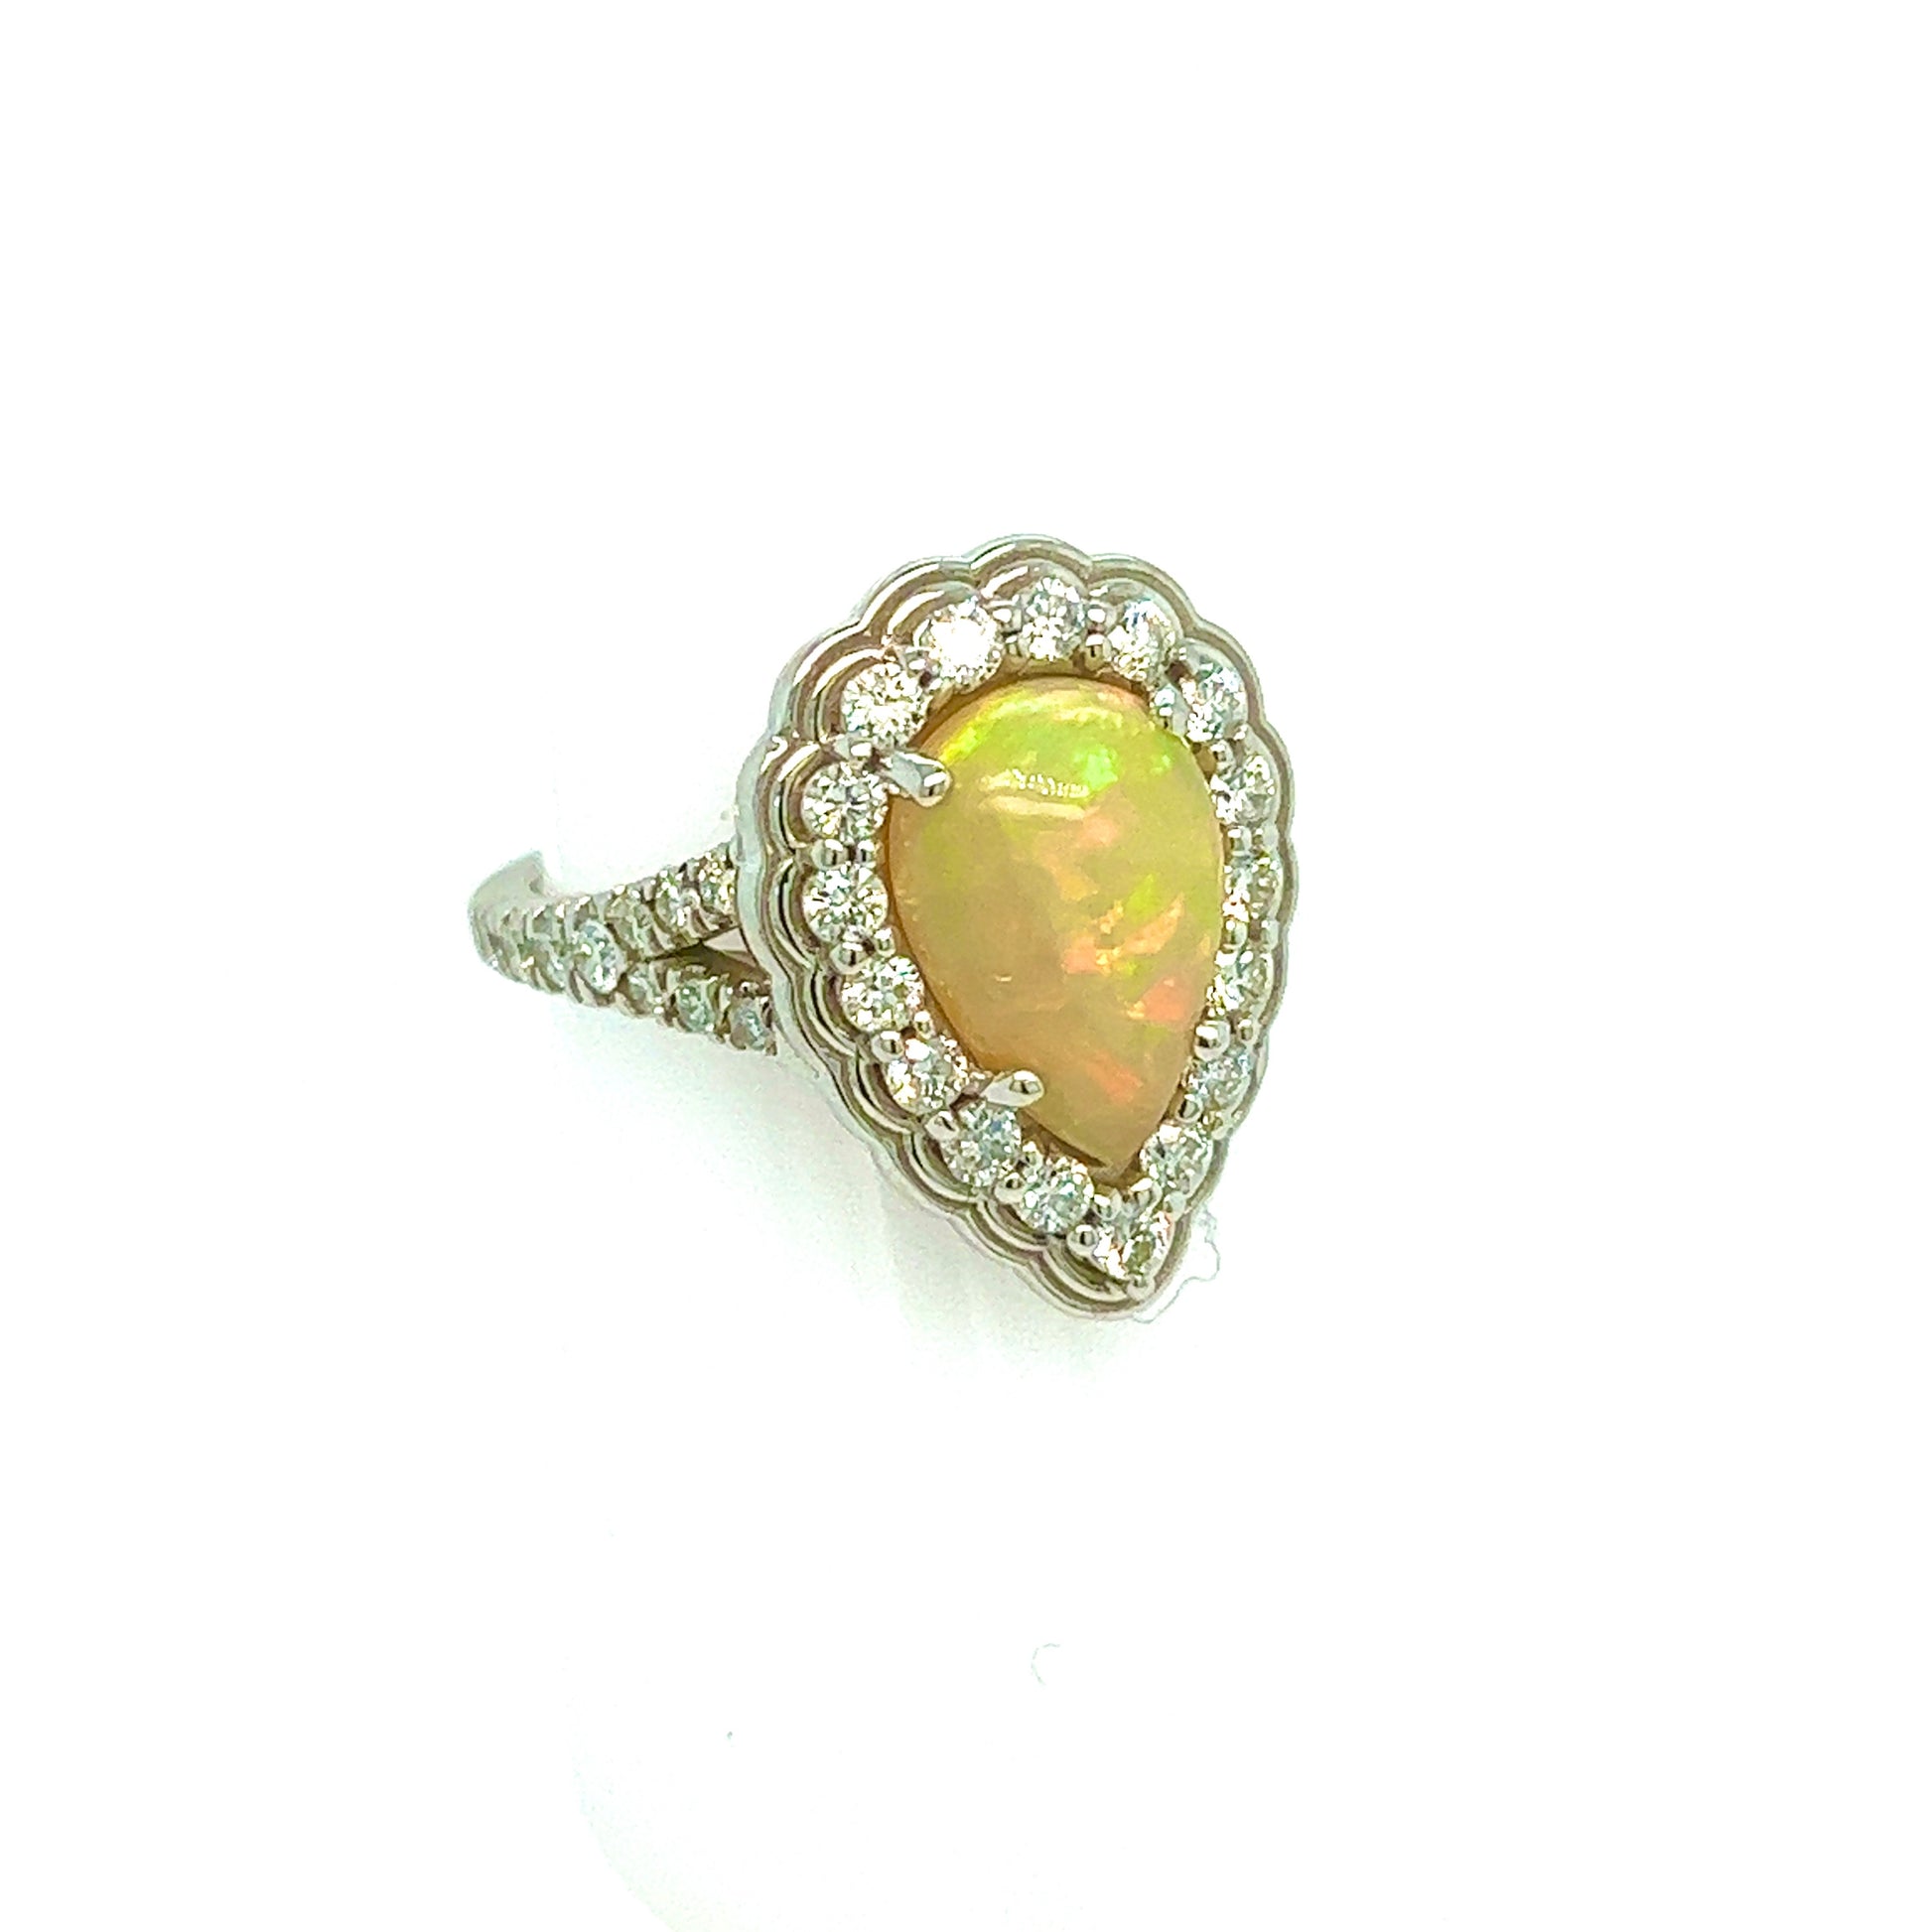 Natural Opal Diamond Ring 6.25 14k W Gold 2.35 TCW Certified $4,950 304174 - Certified Fine Jewelry